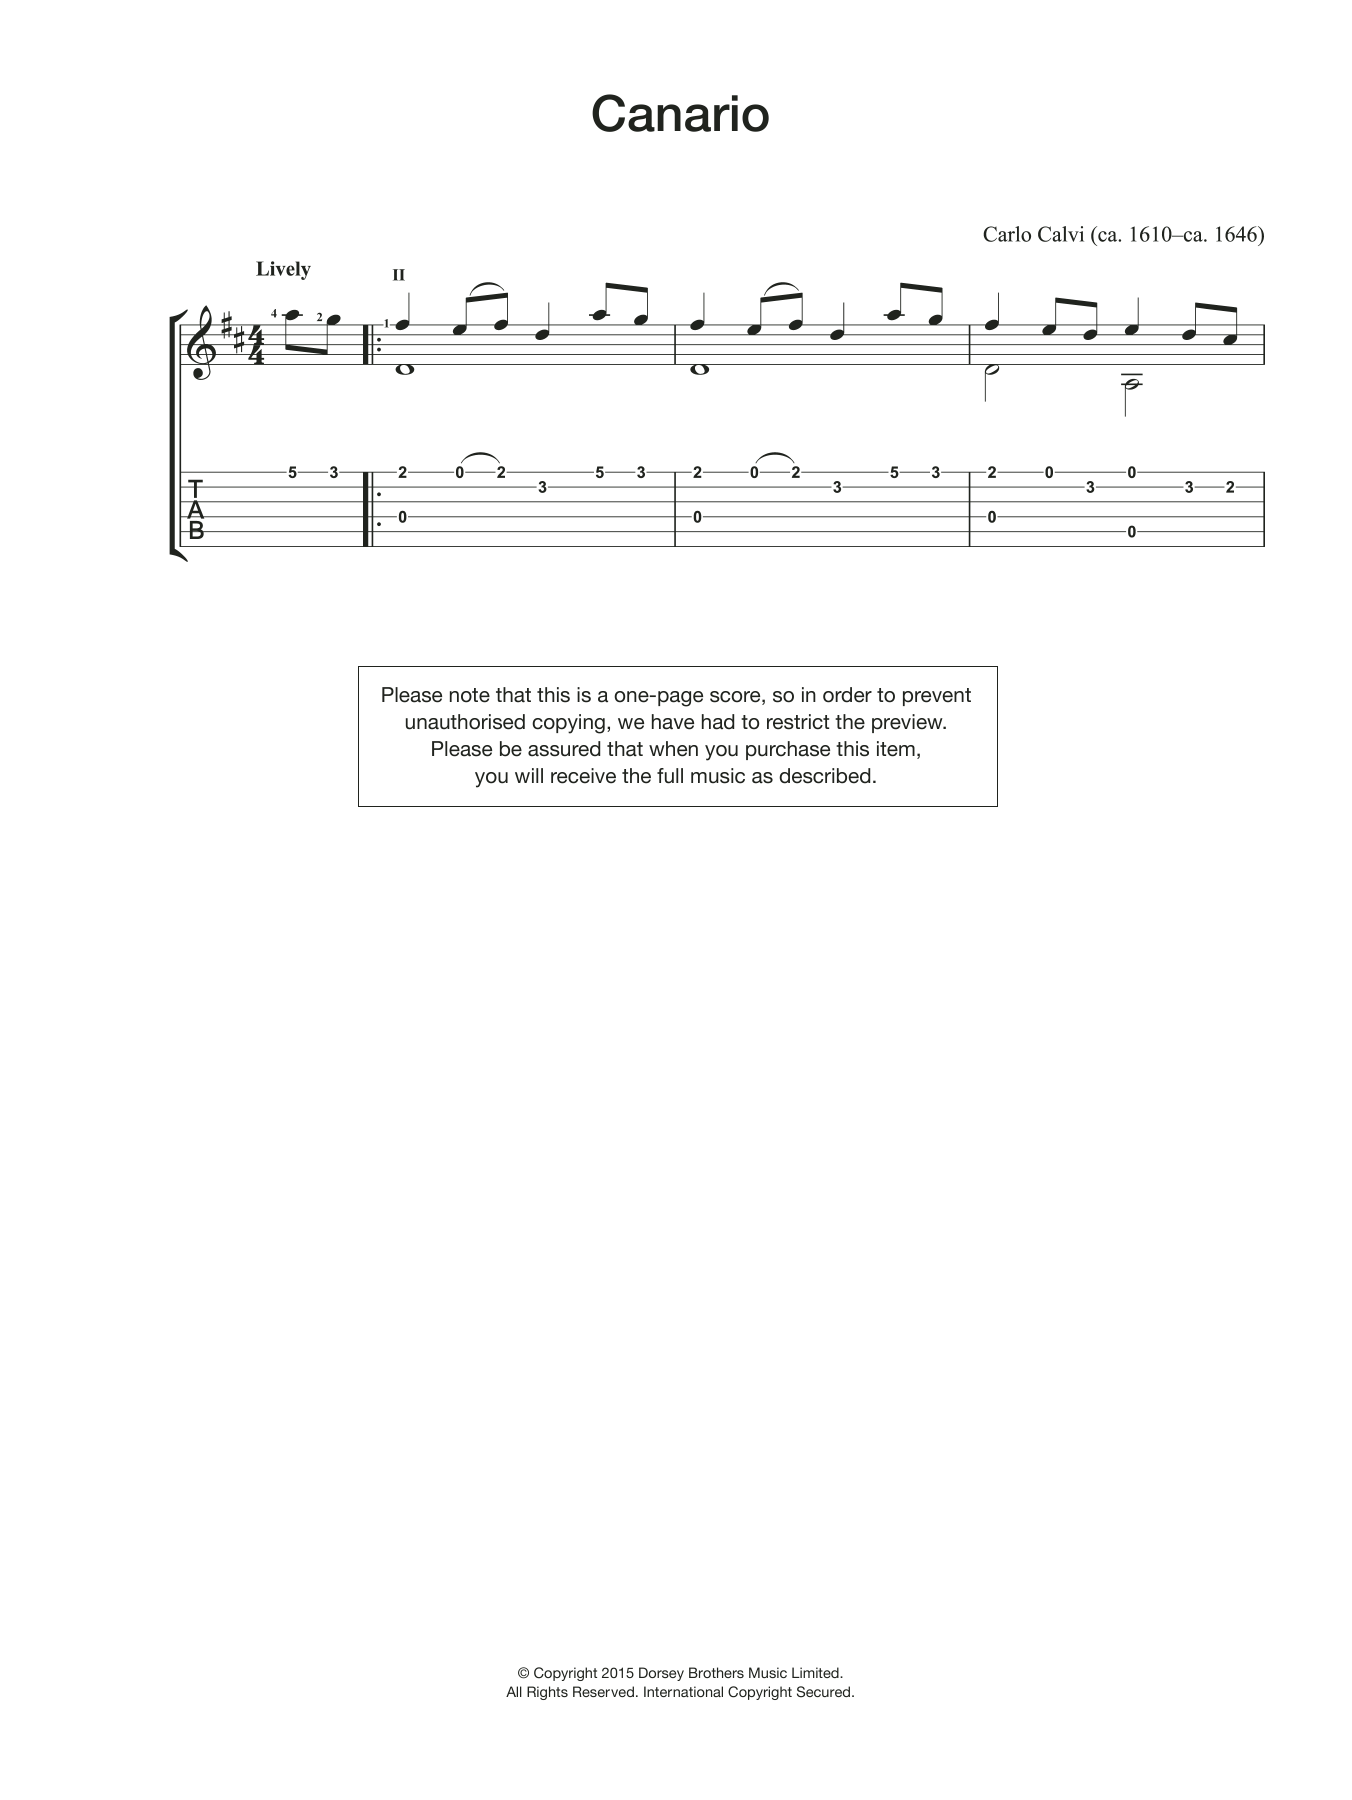 Carlo Calvi Canario Sheet Music Notes & Chords for Guitar - Download or Print PDF